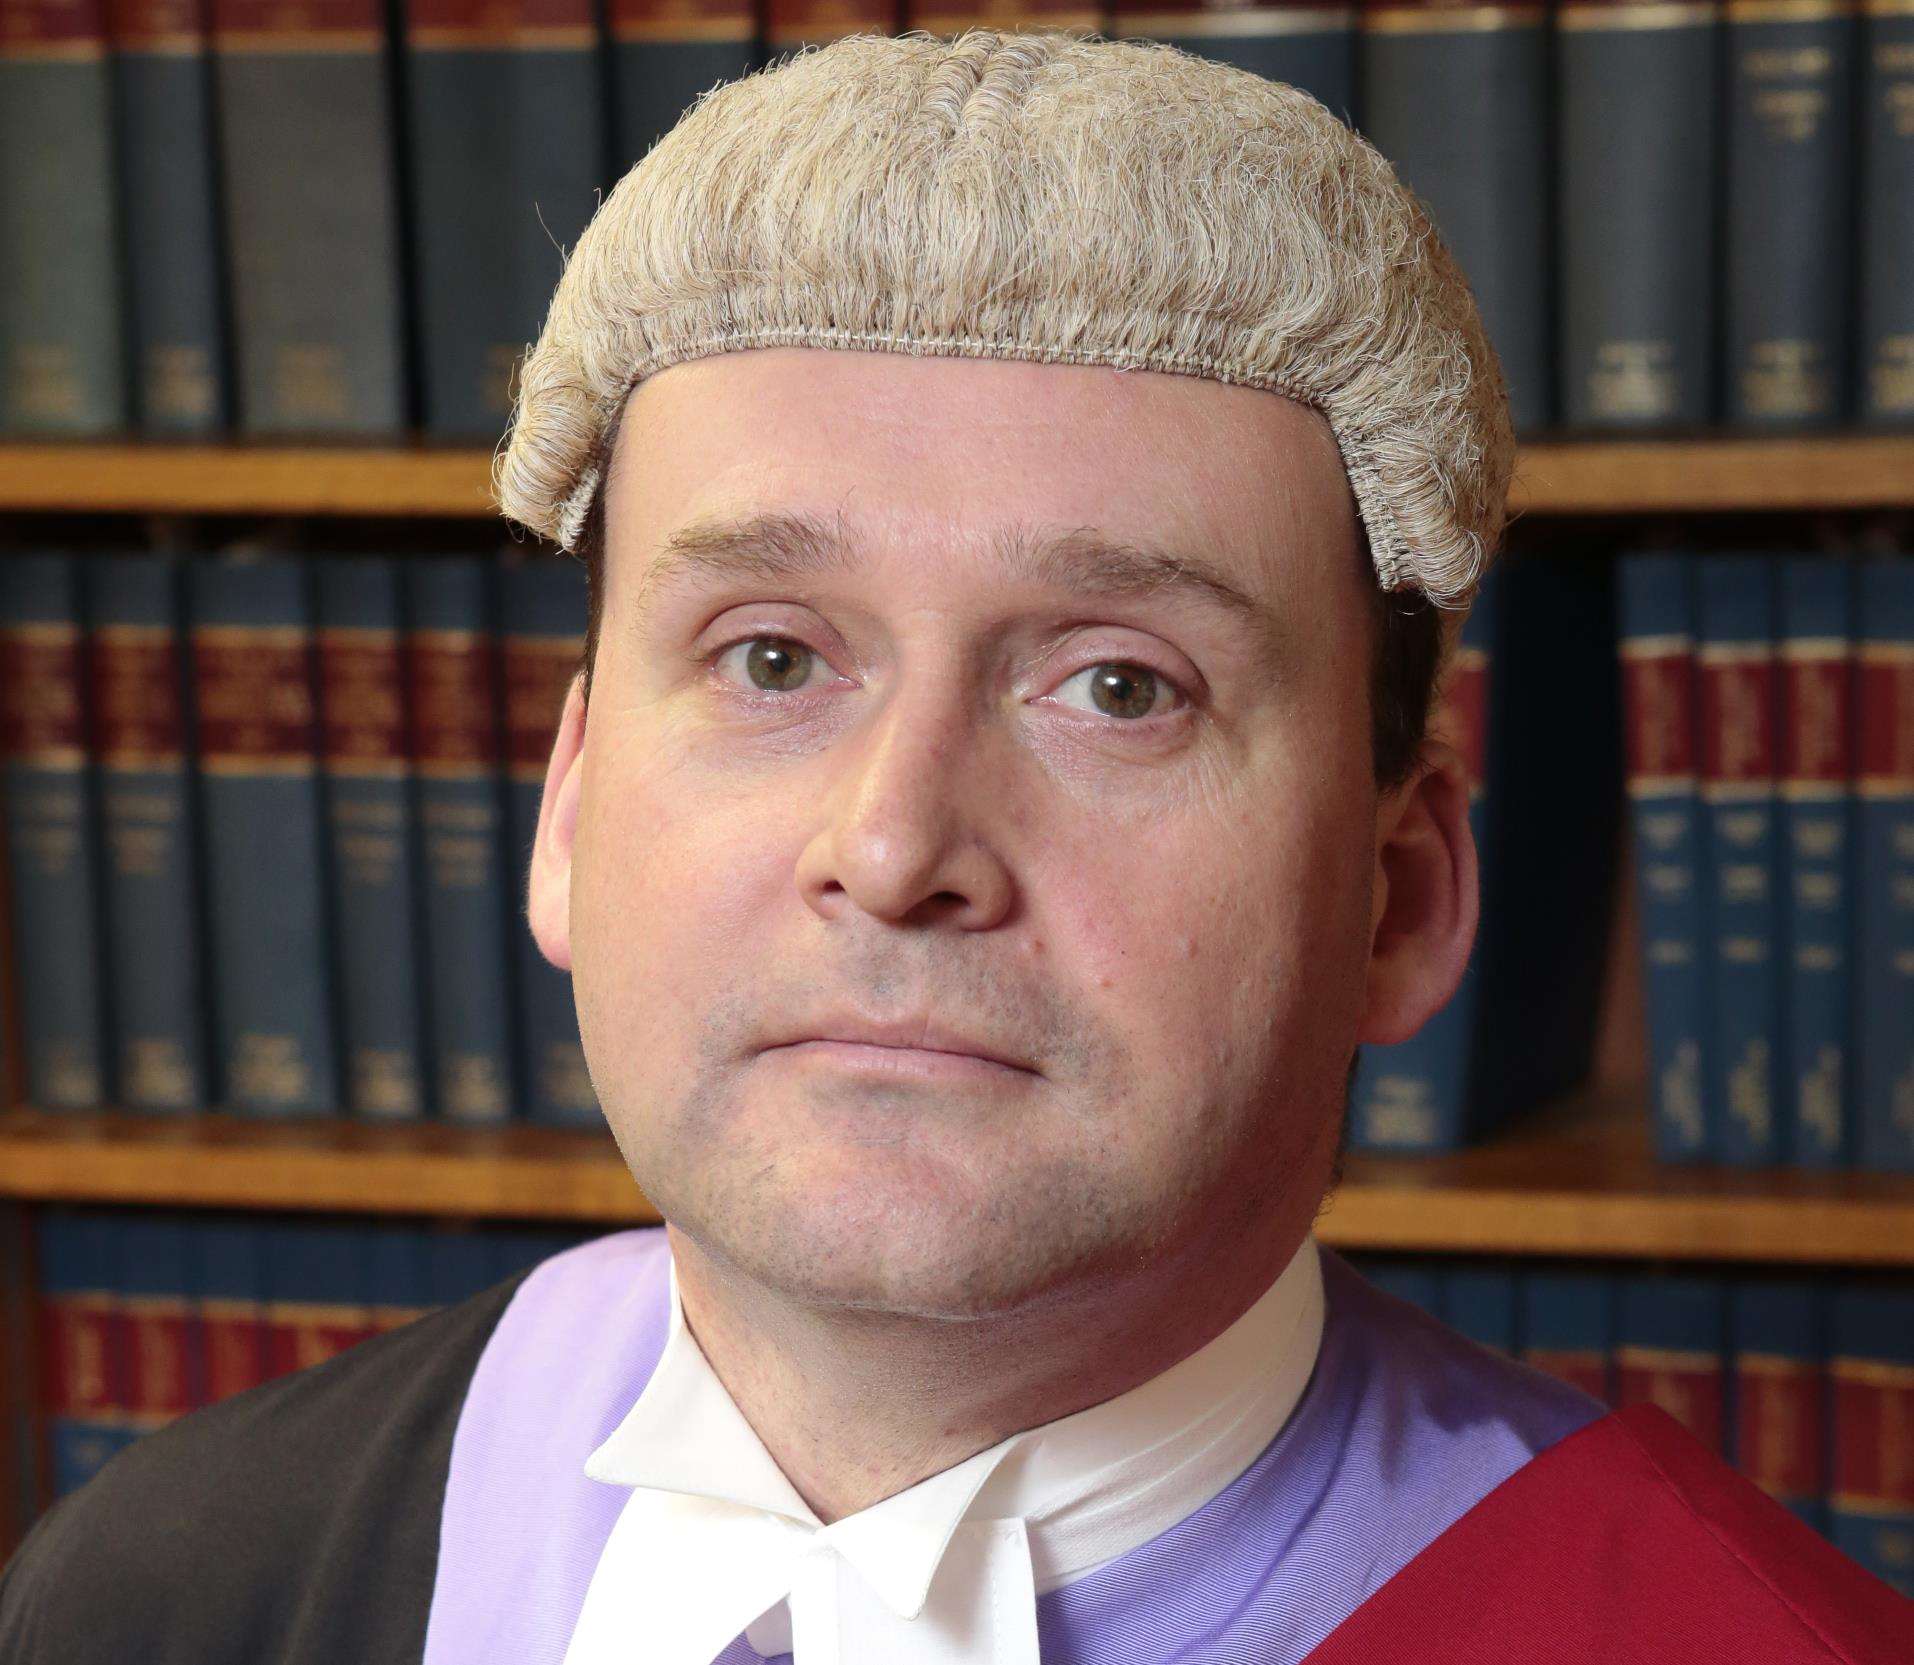 Judge Julian Smith